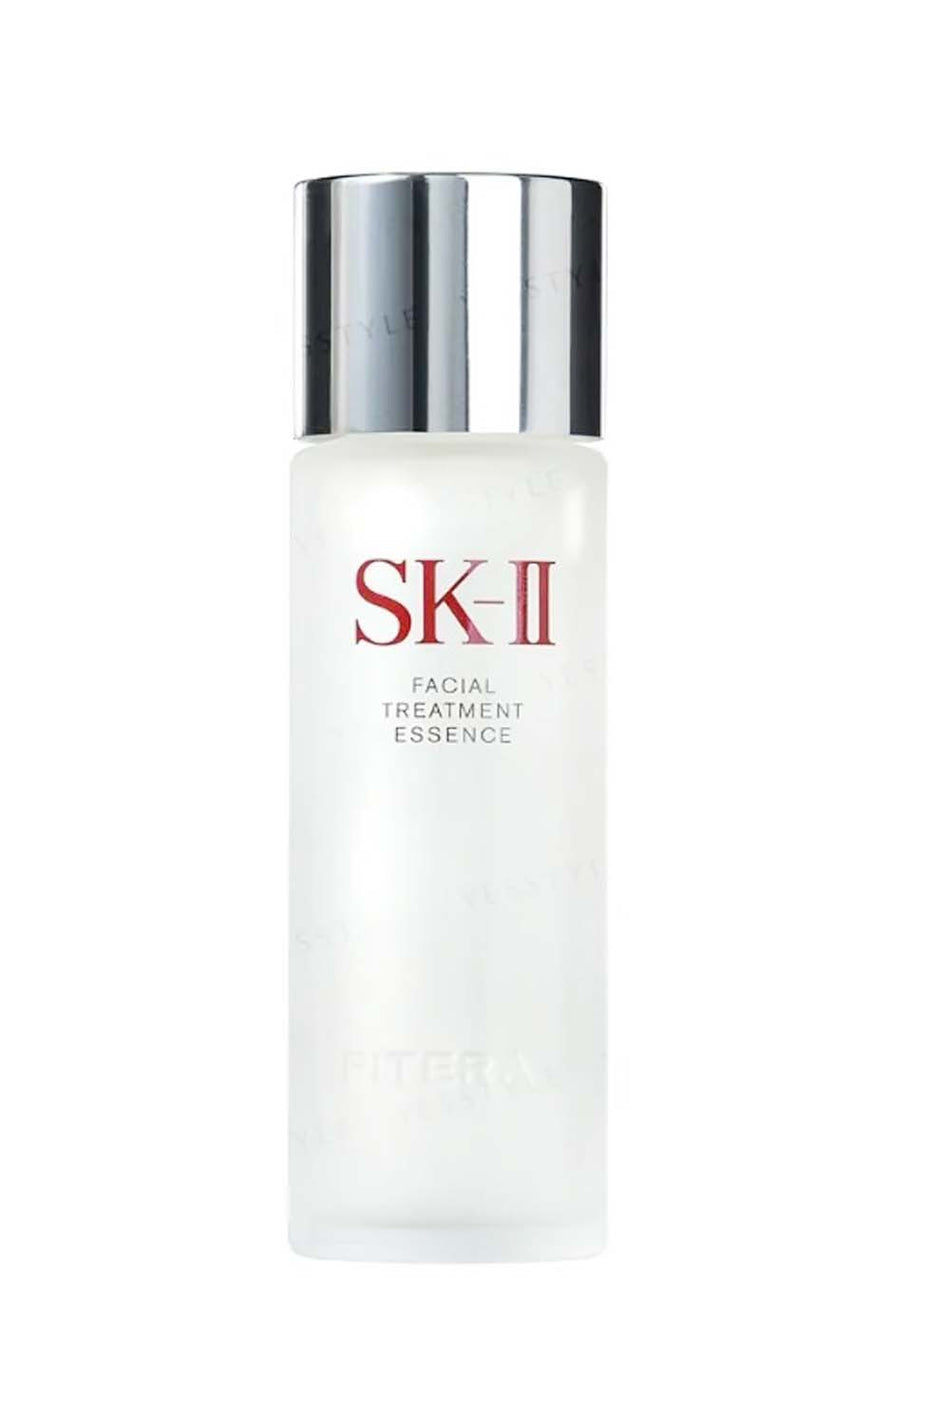 SK-II - Facial Treatment Essence-30ml